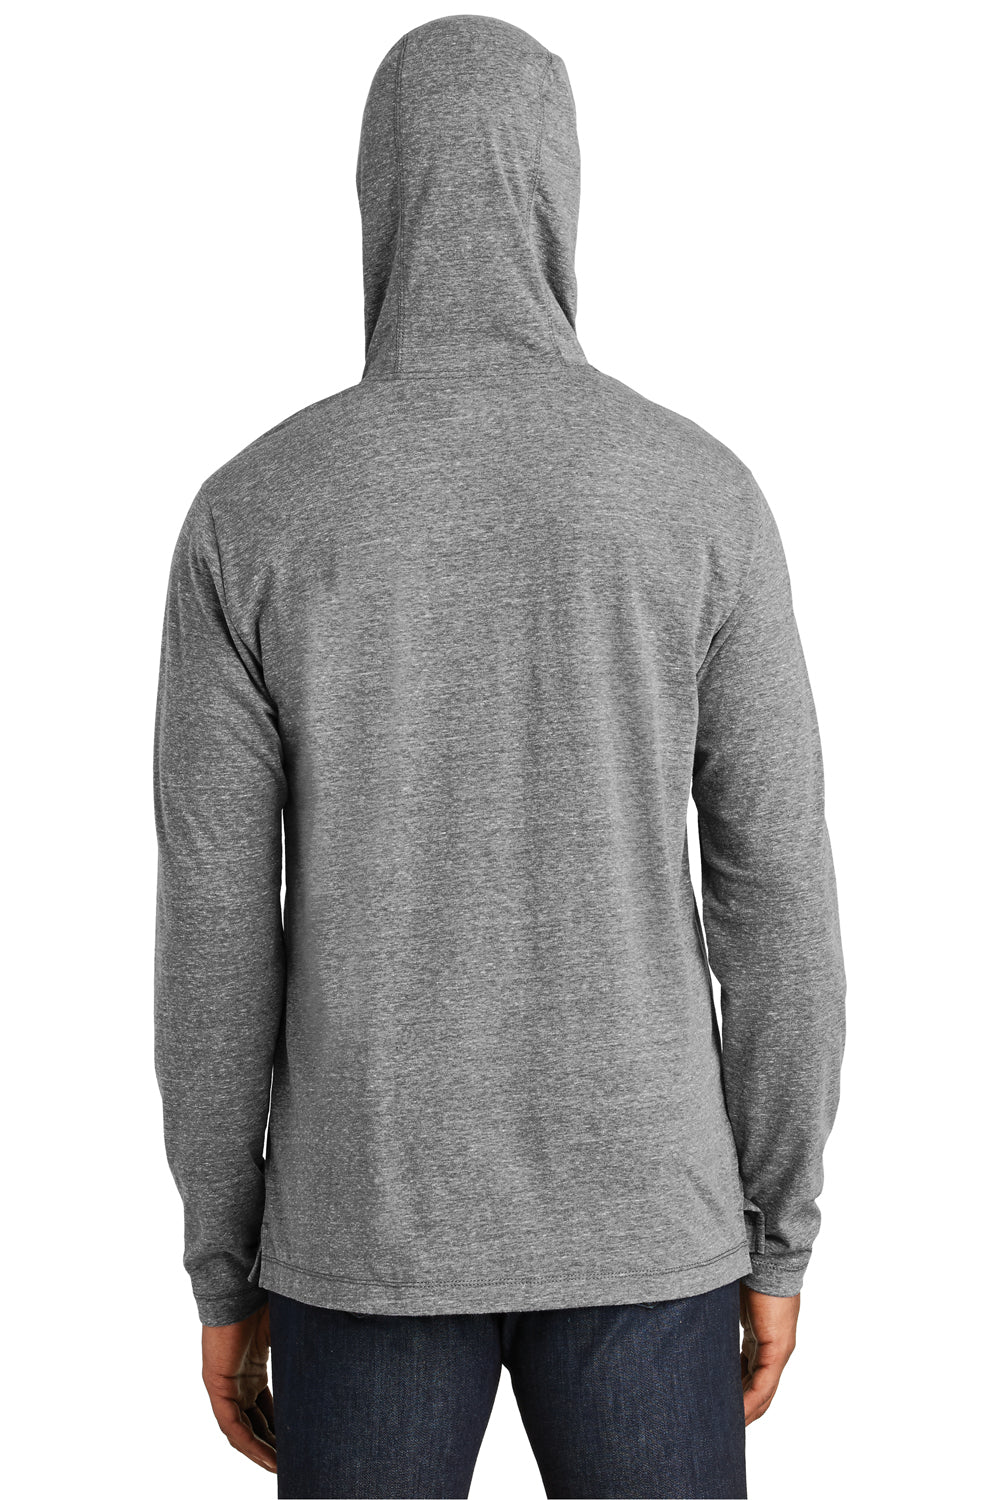 New Era NEA131 Mens Performance Moisture Wicking Long Sleeve Hooded T-Shirt Hoodie Shadow Grey Back